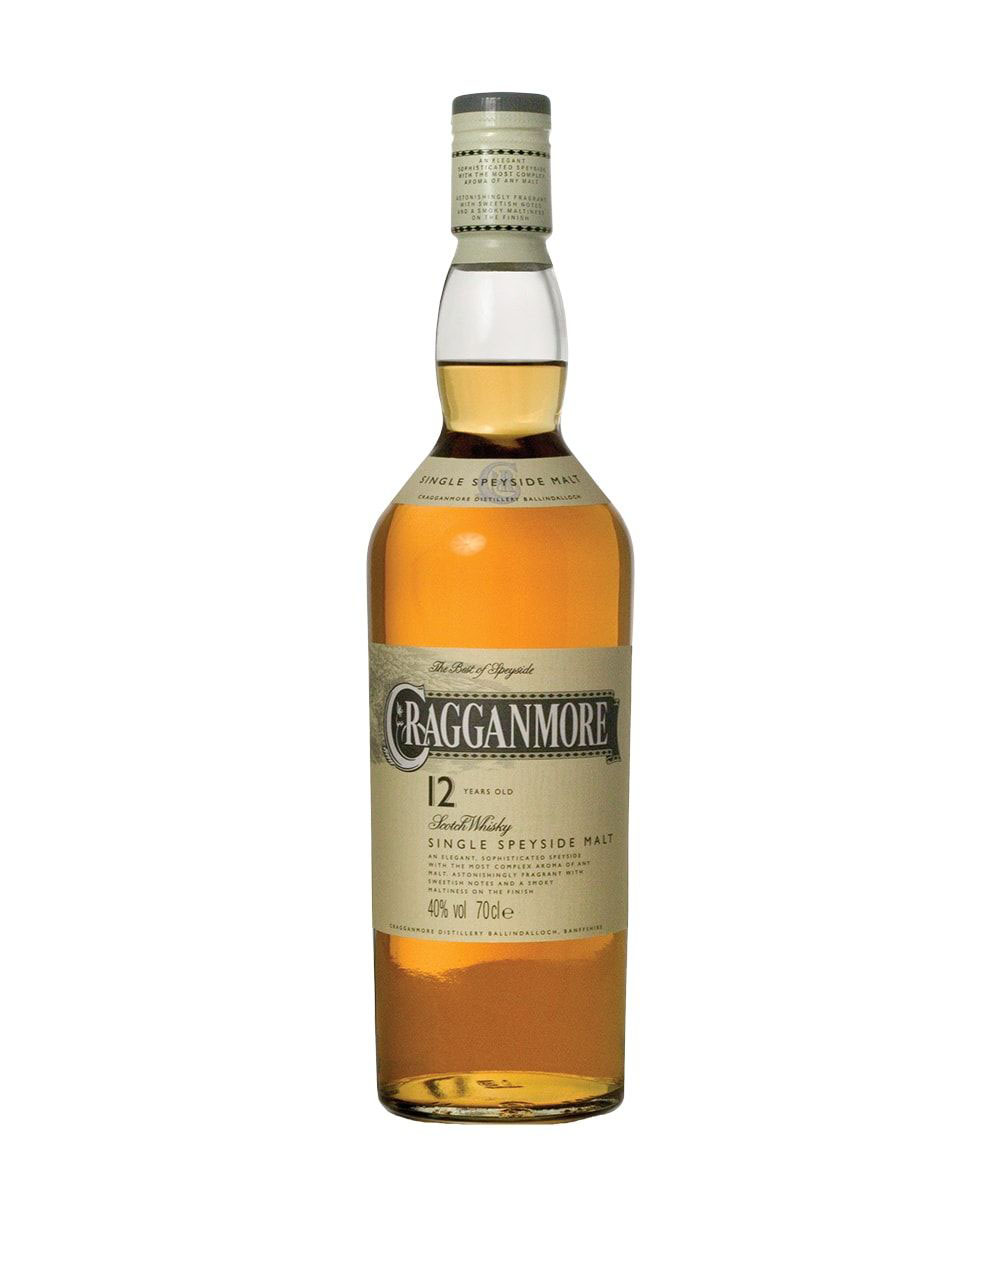 Glenmorangie Nectar D'Or Single Malt Scotch Whisky